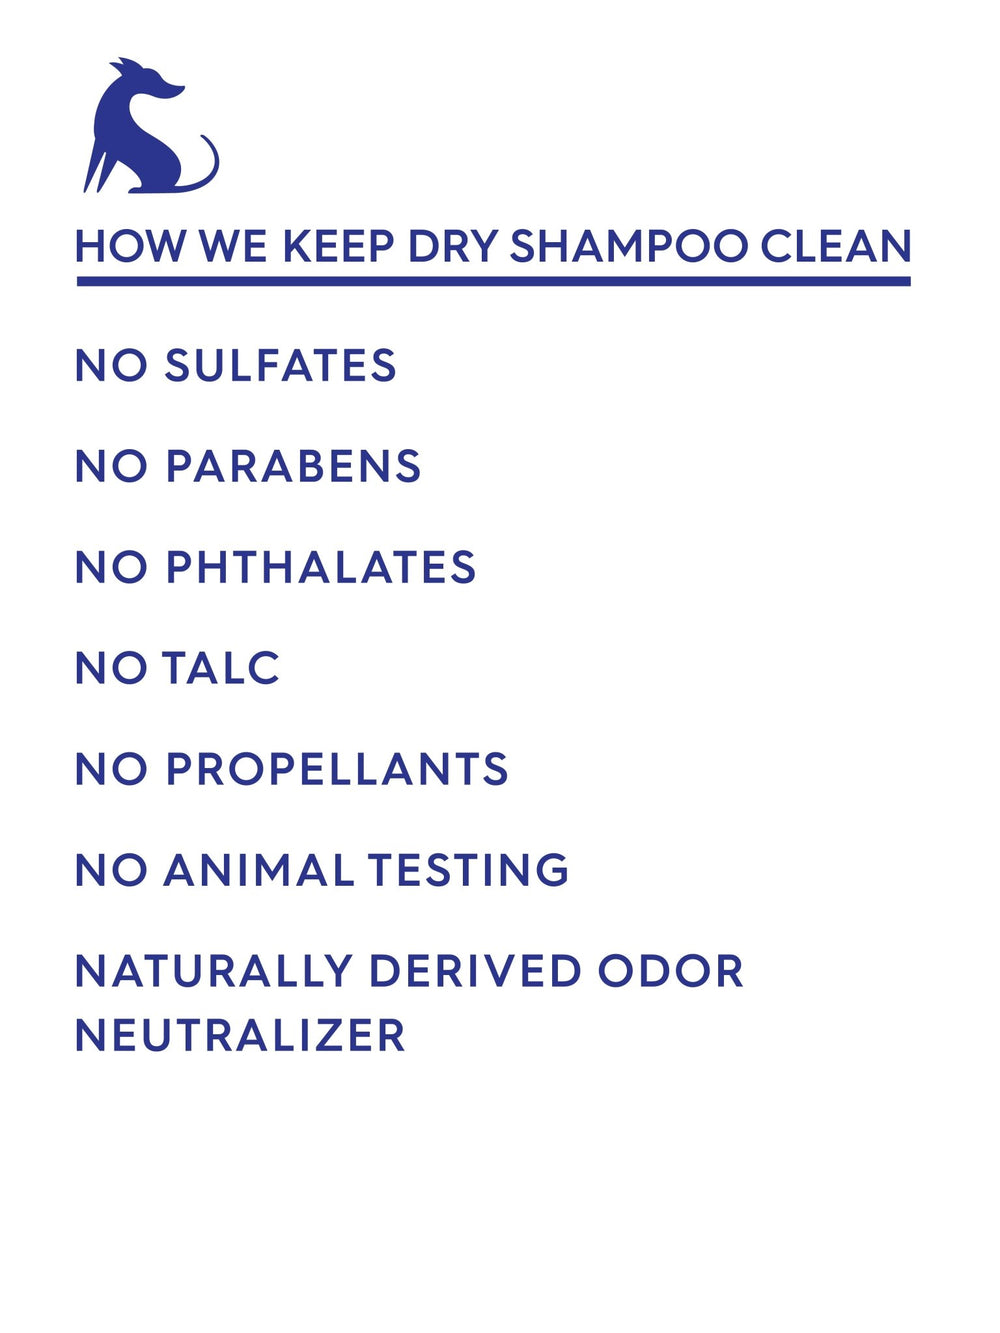 The Dry Shampoo - Rowan - Consumerhaus